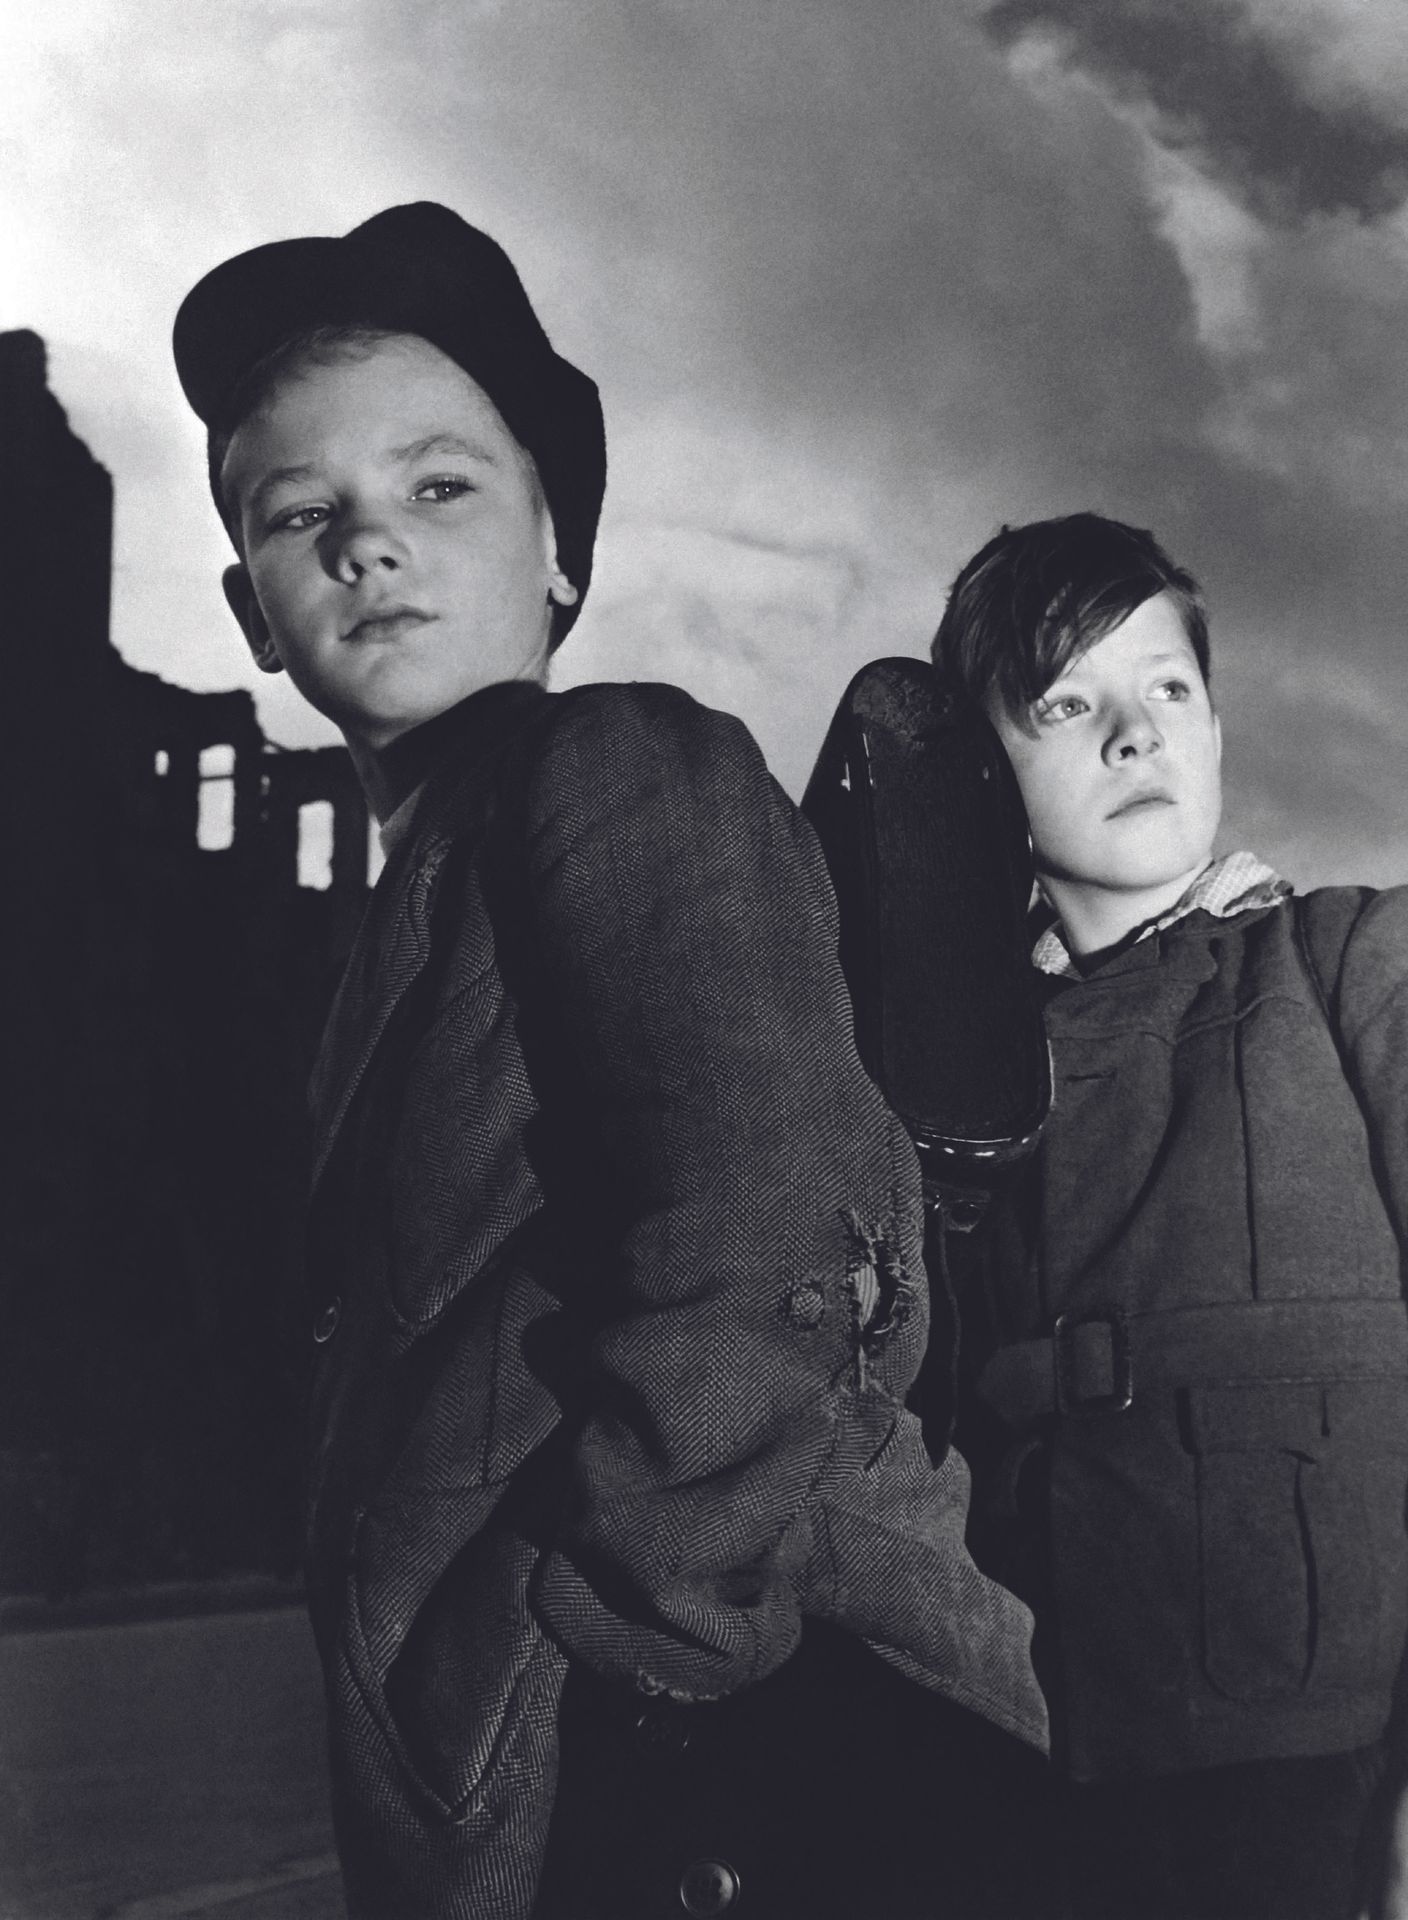 AFP - Jean MANZON 法新社 - Jean MANZON

两个年轻的柏林人在城市的废墟上

1948年12月，柏林被封锁期间。

照片在银色数码&hellip;